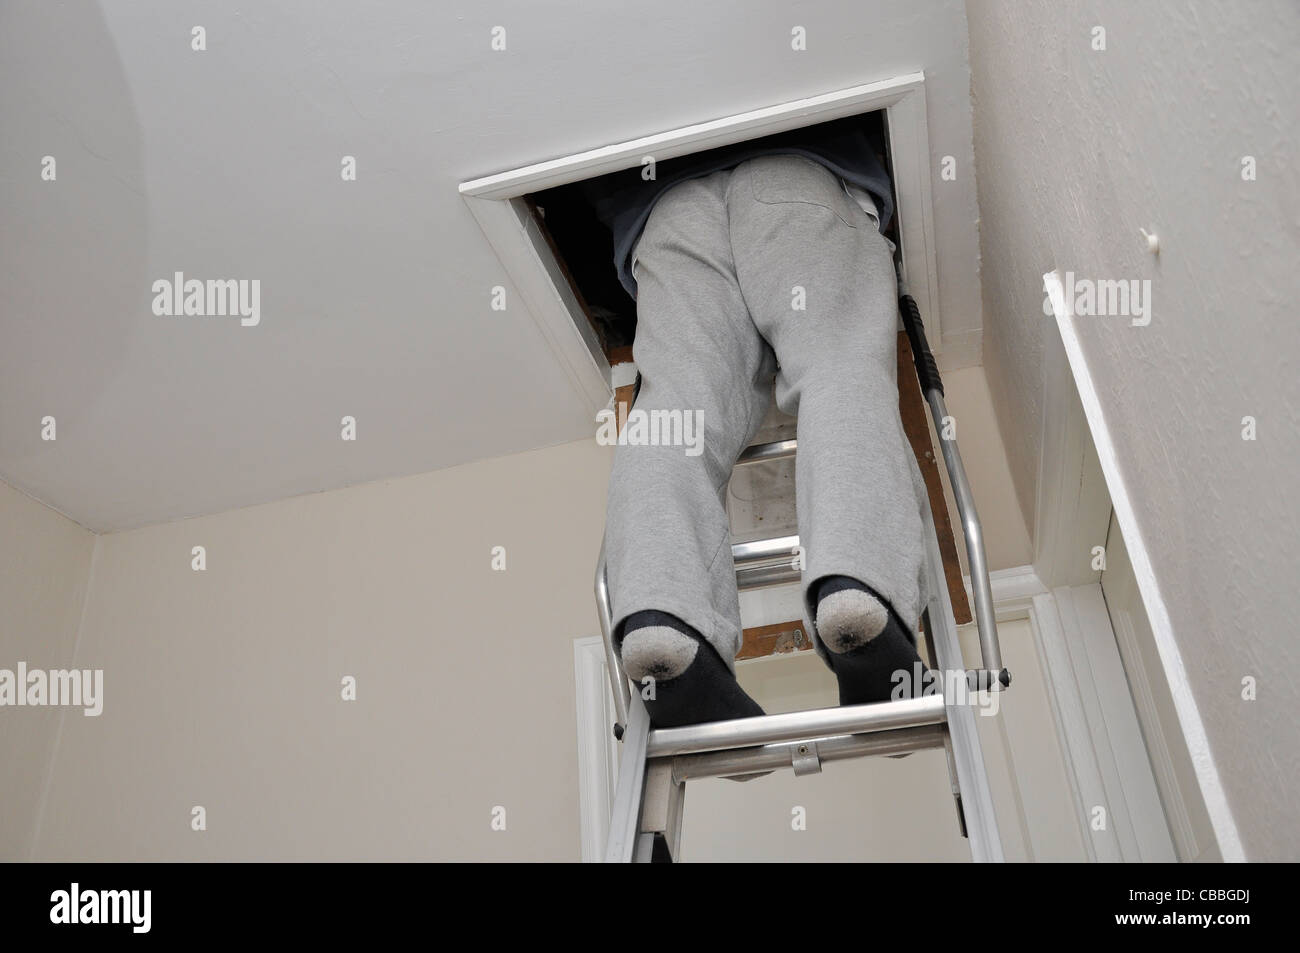 Man climbing ladder up into loft Stock Photo - Alamy